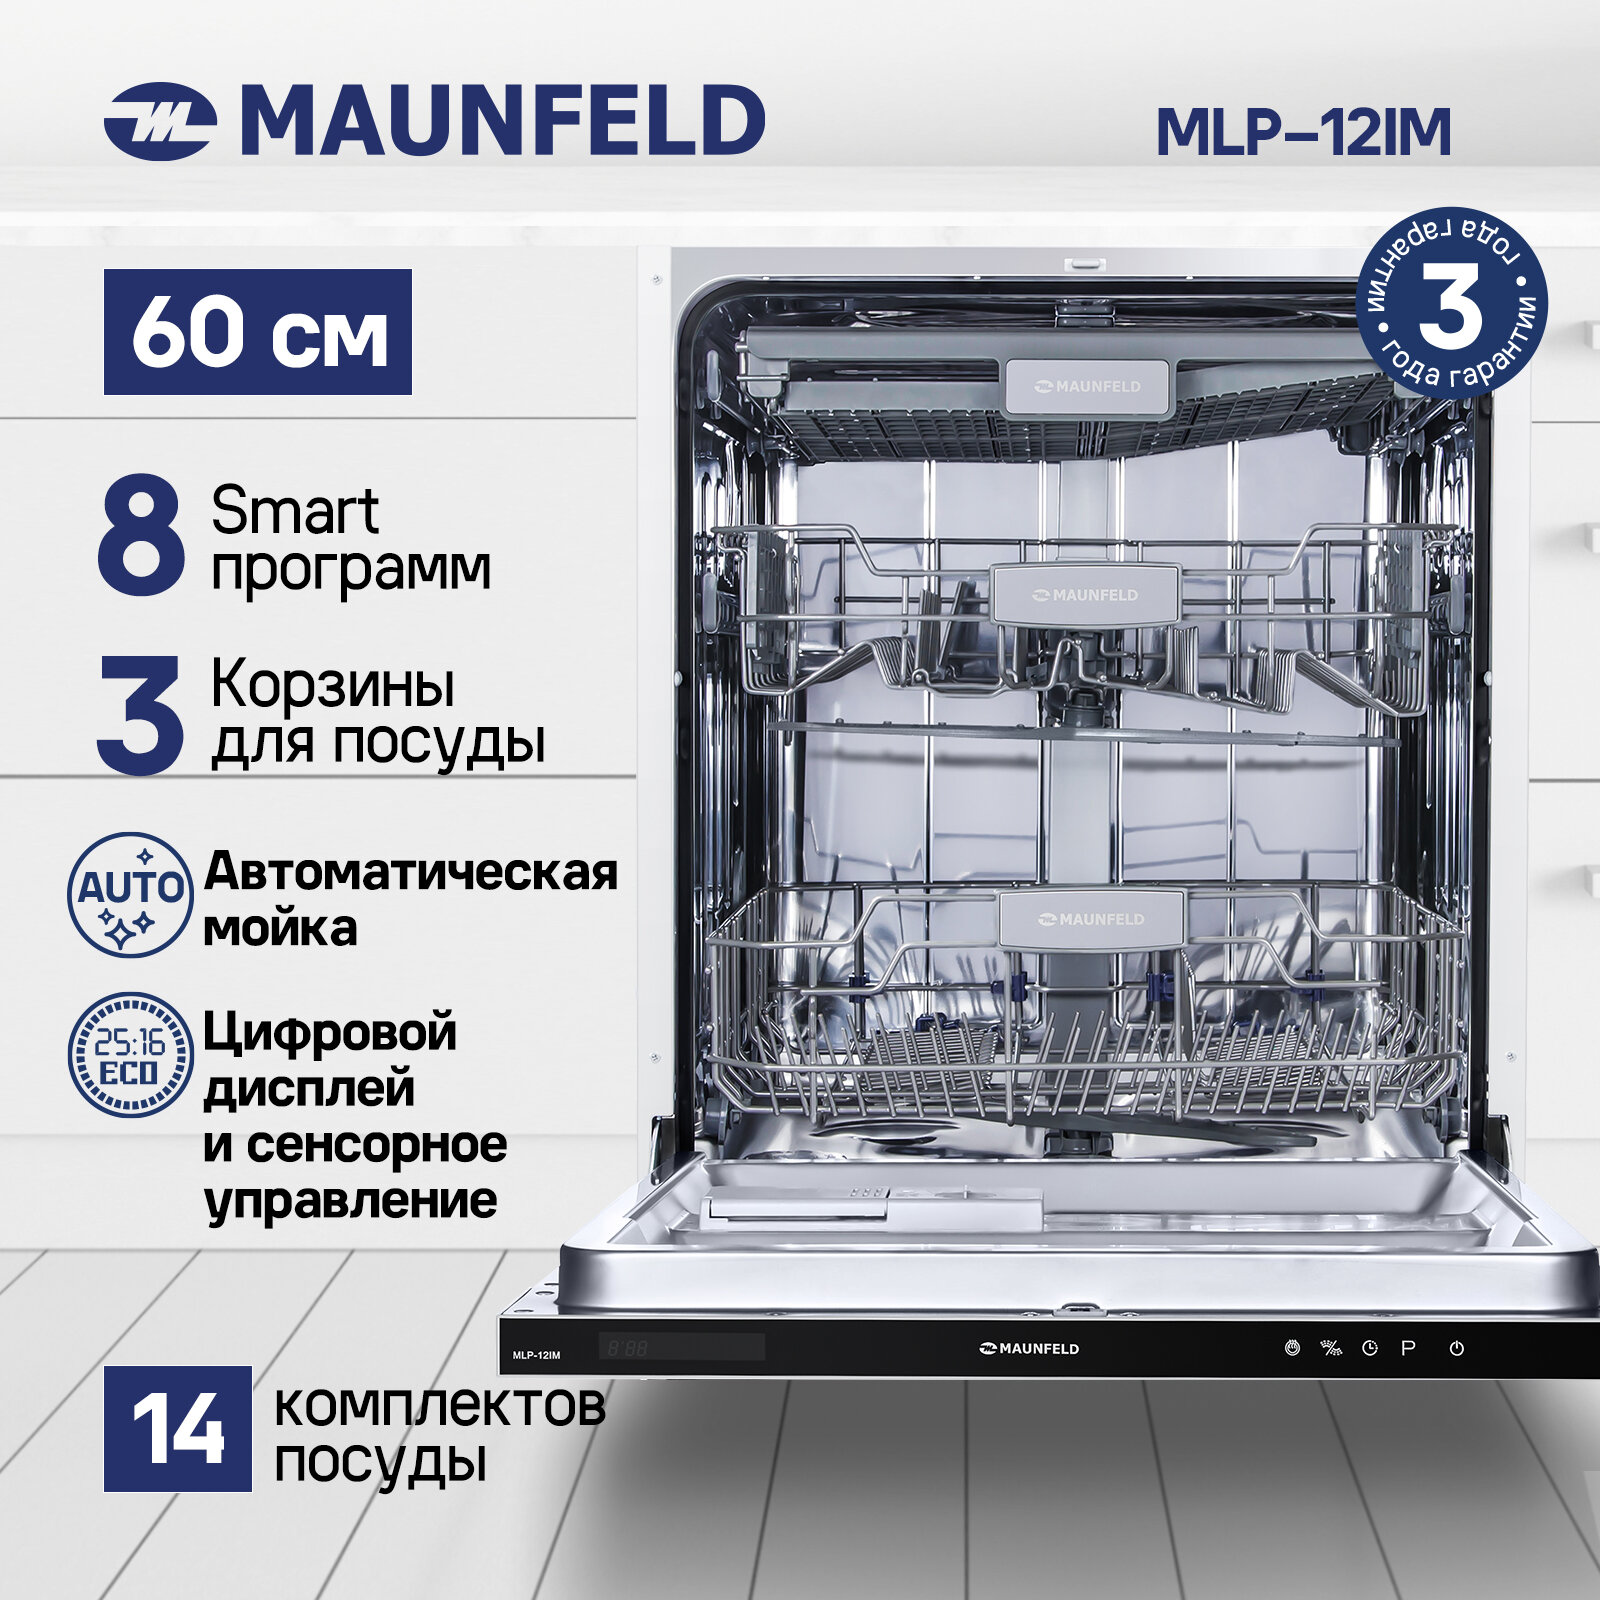 Посудомоечная машина Maunfeld - фото №1